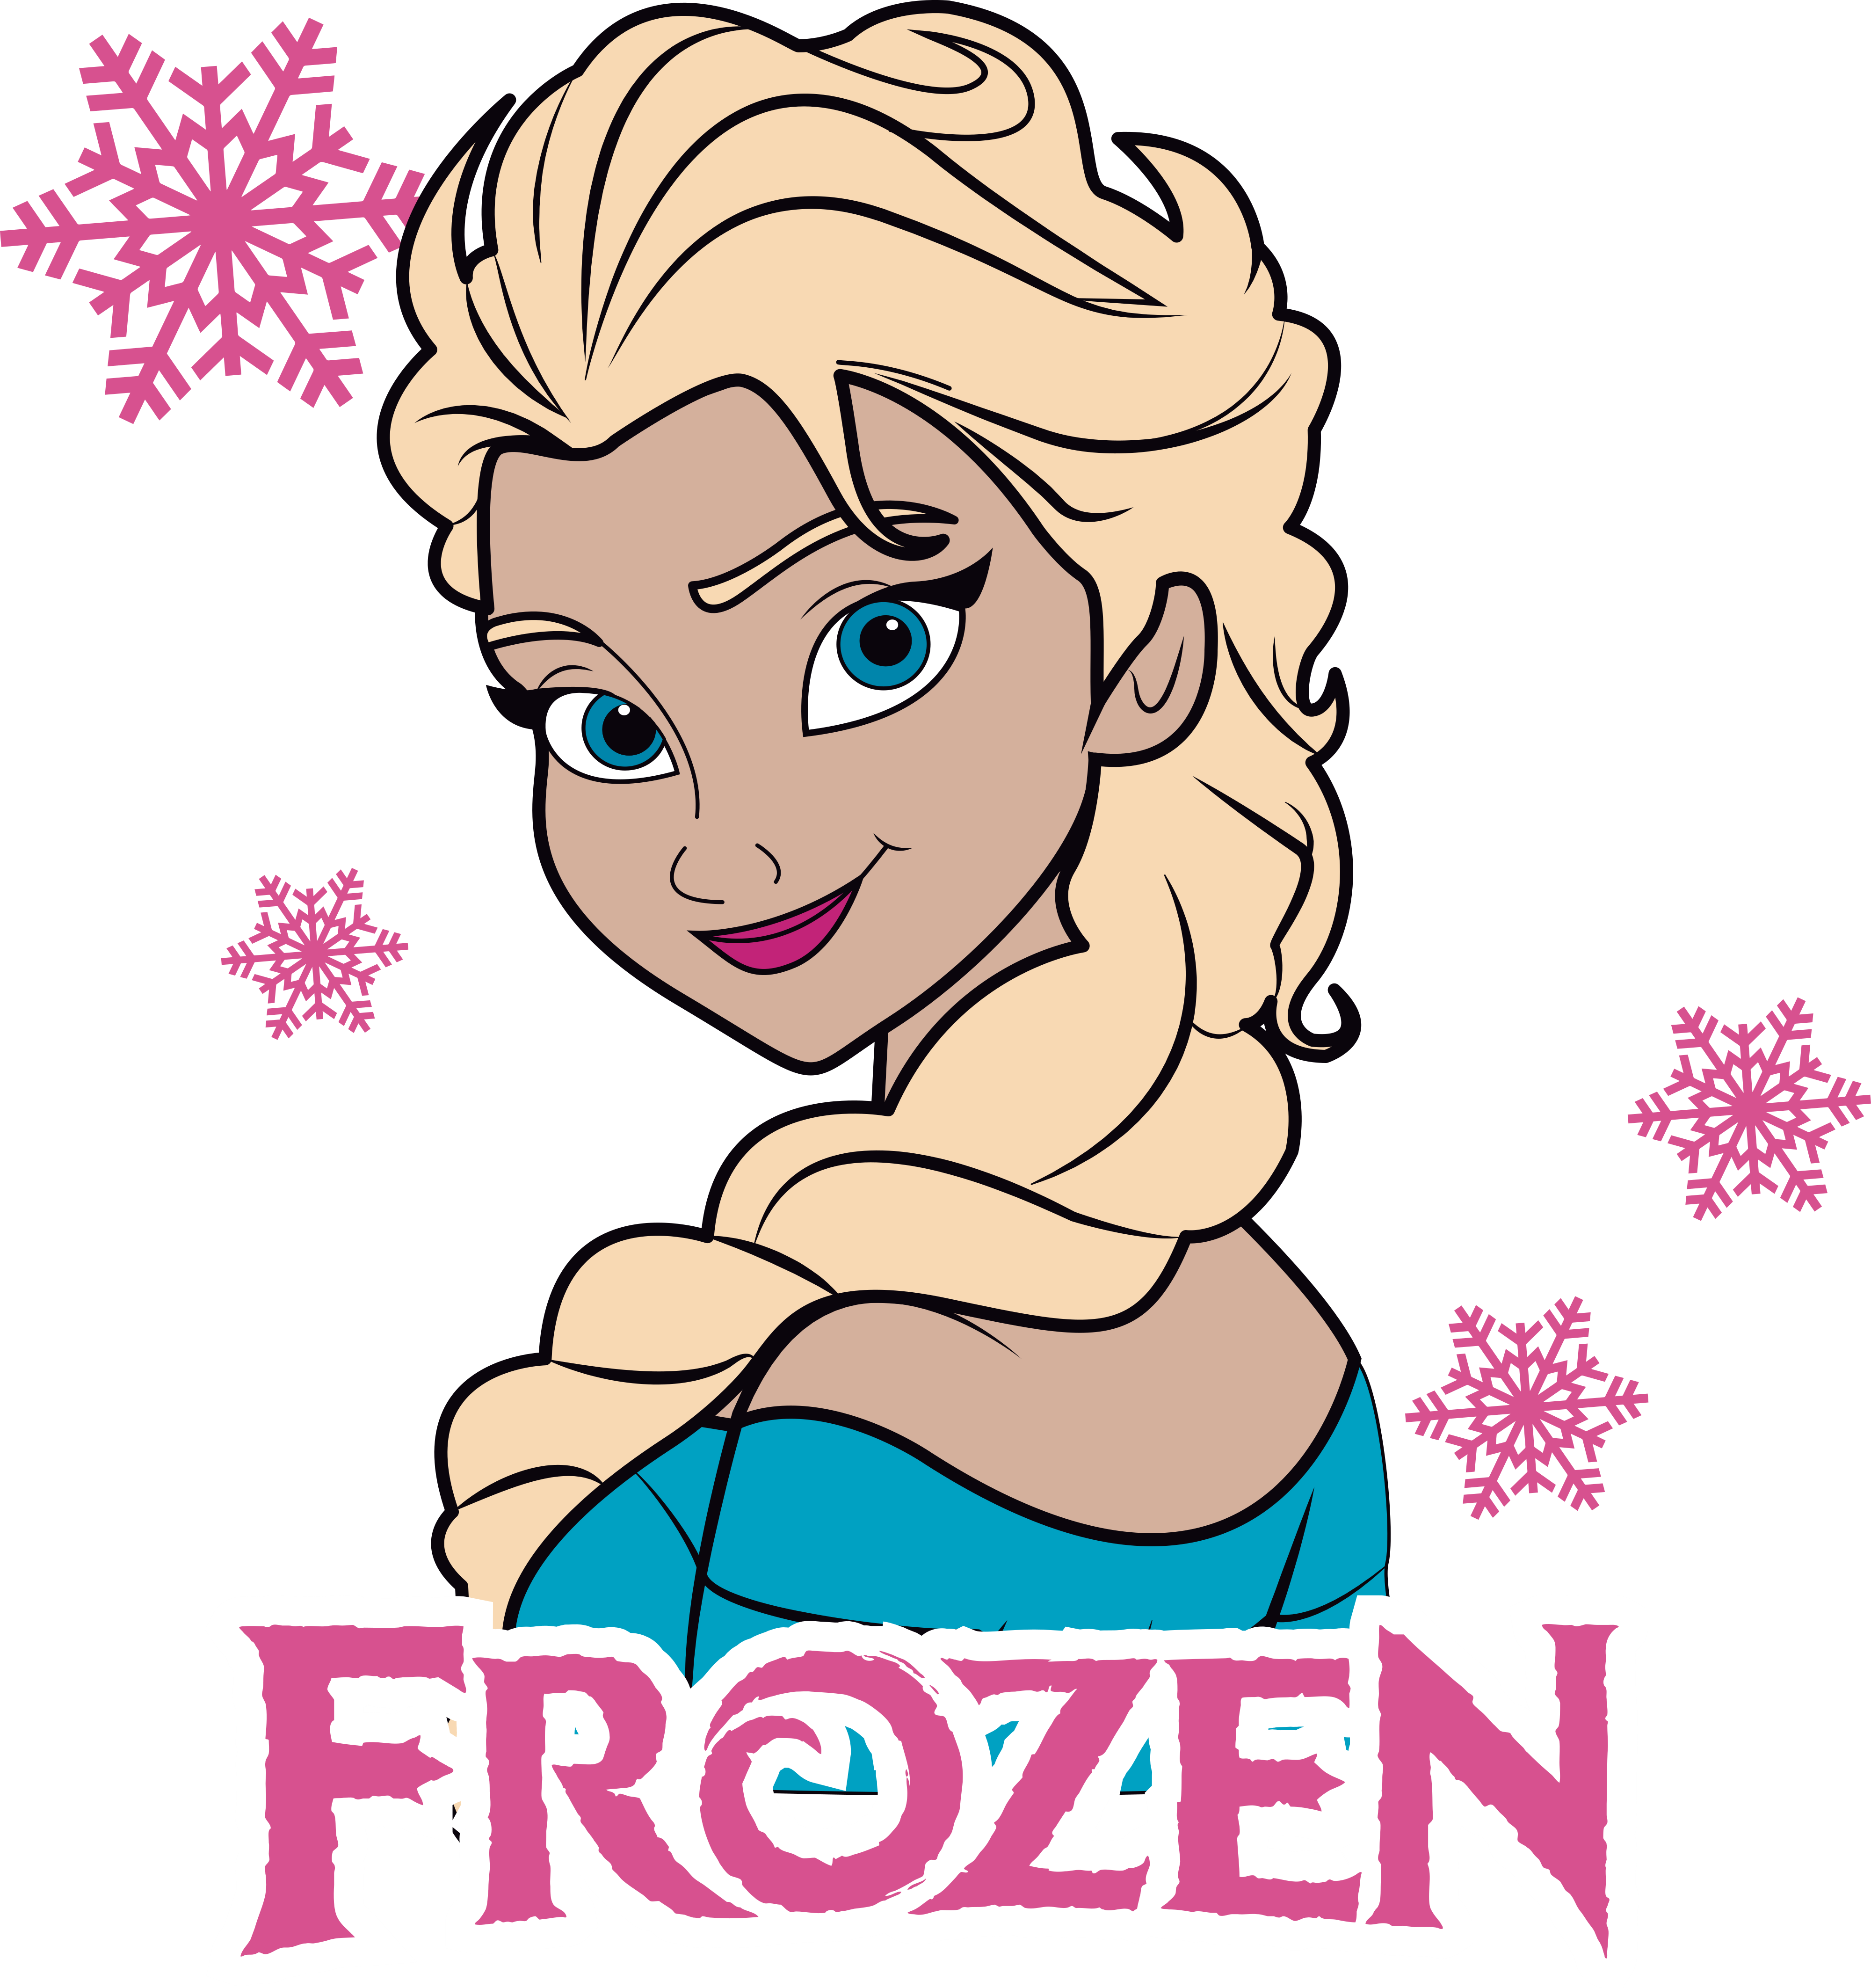 Frozen logo 